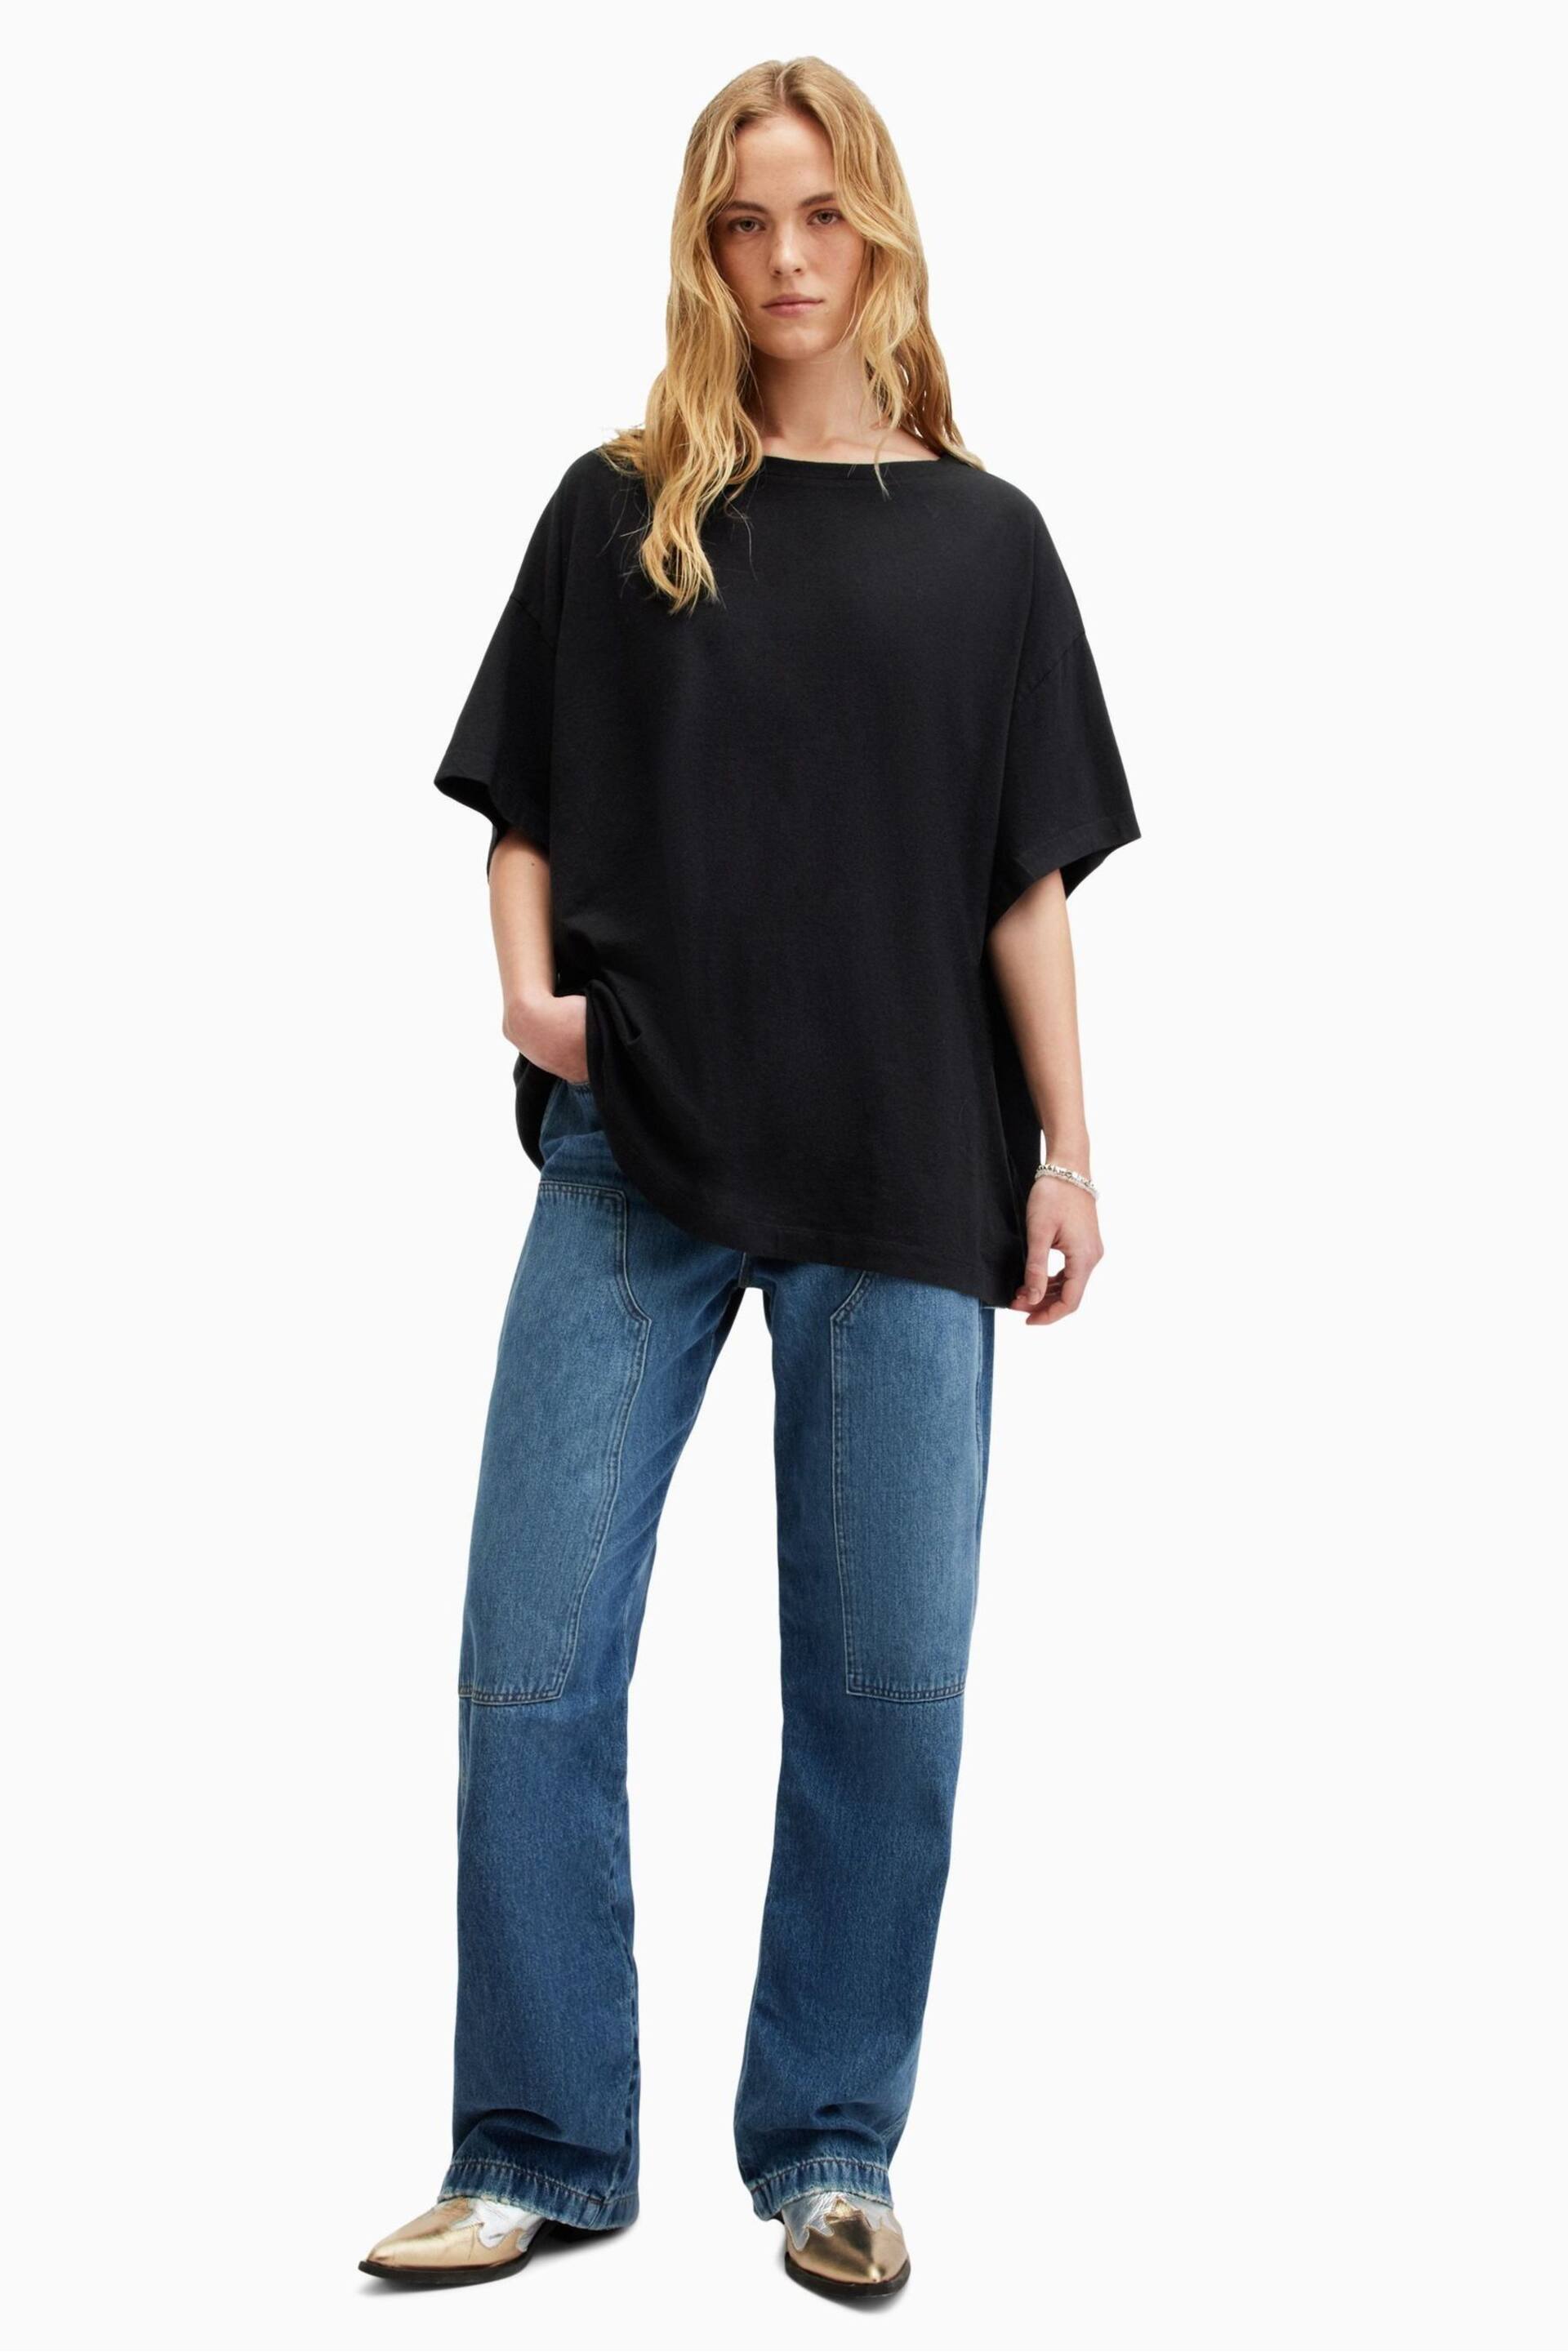 AllSaints Black Lydia T-Shirt - Image 5 of 7